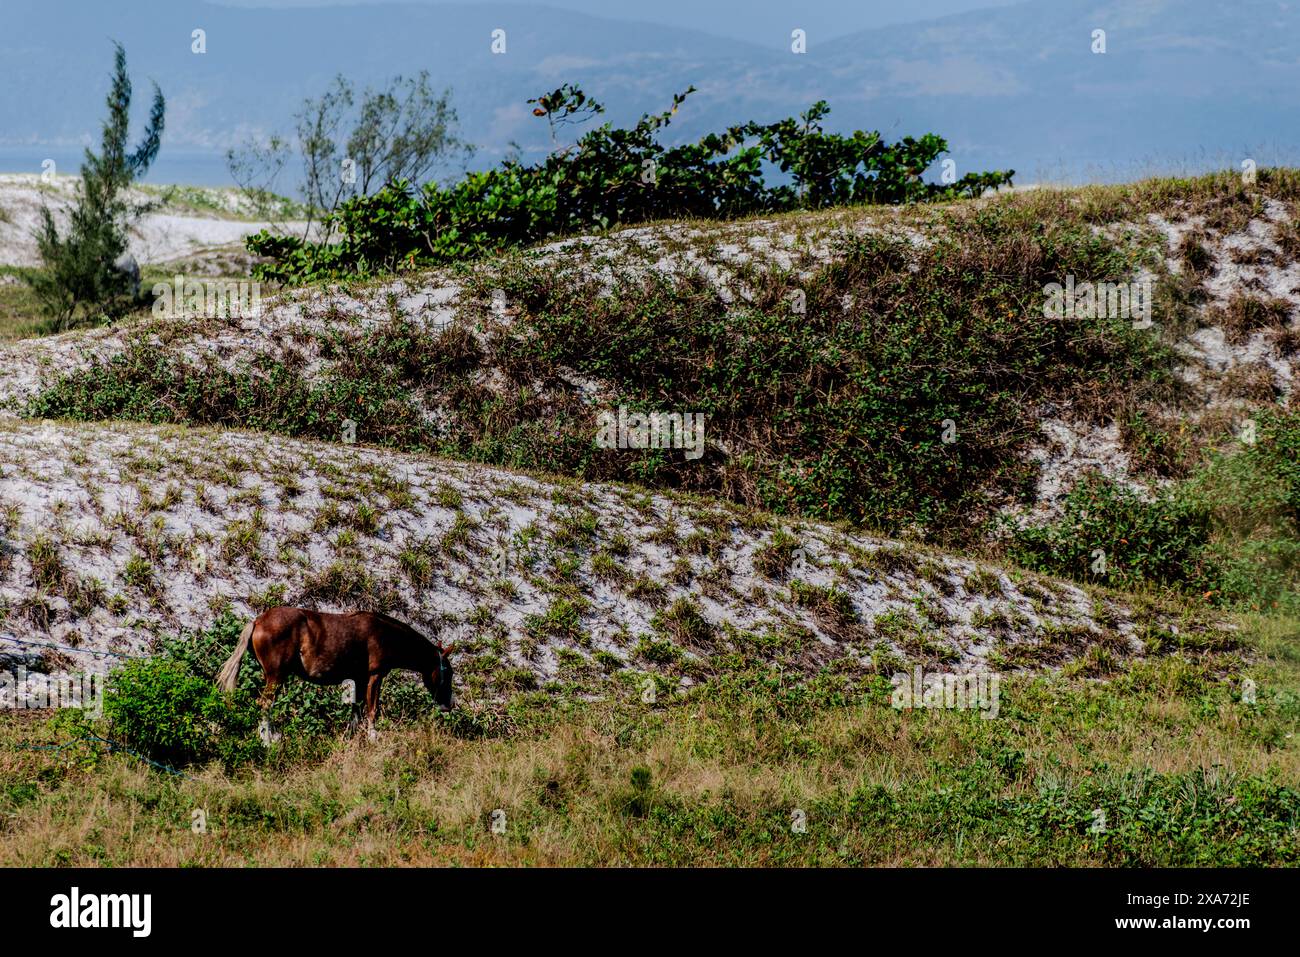 Horse grazing near bush on grassy hillside Stock Photo